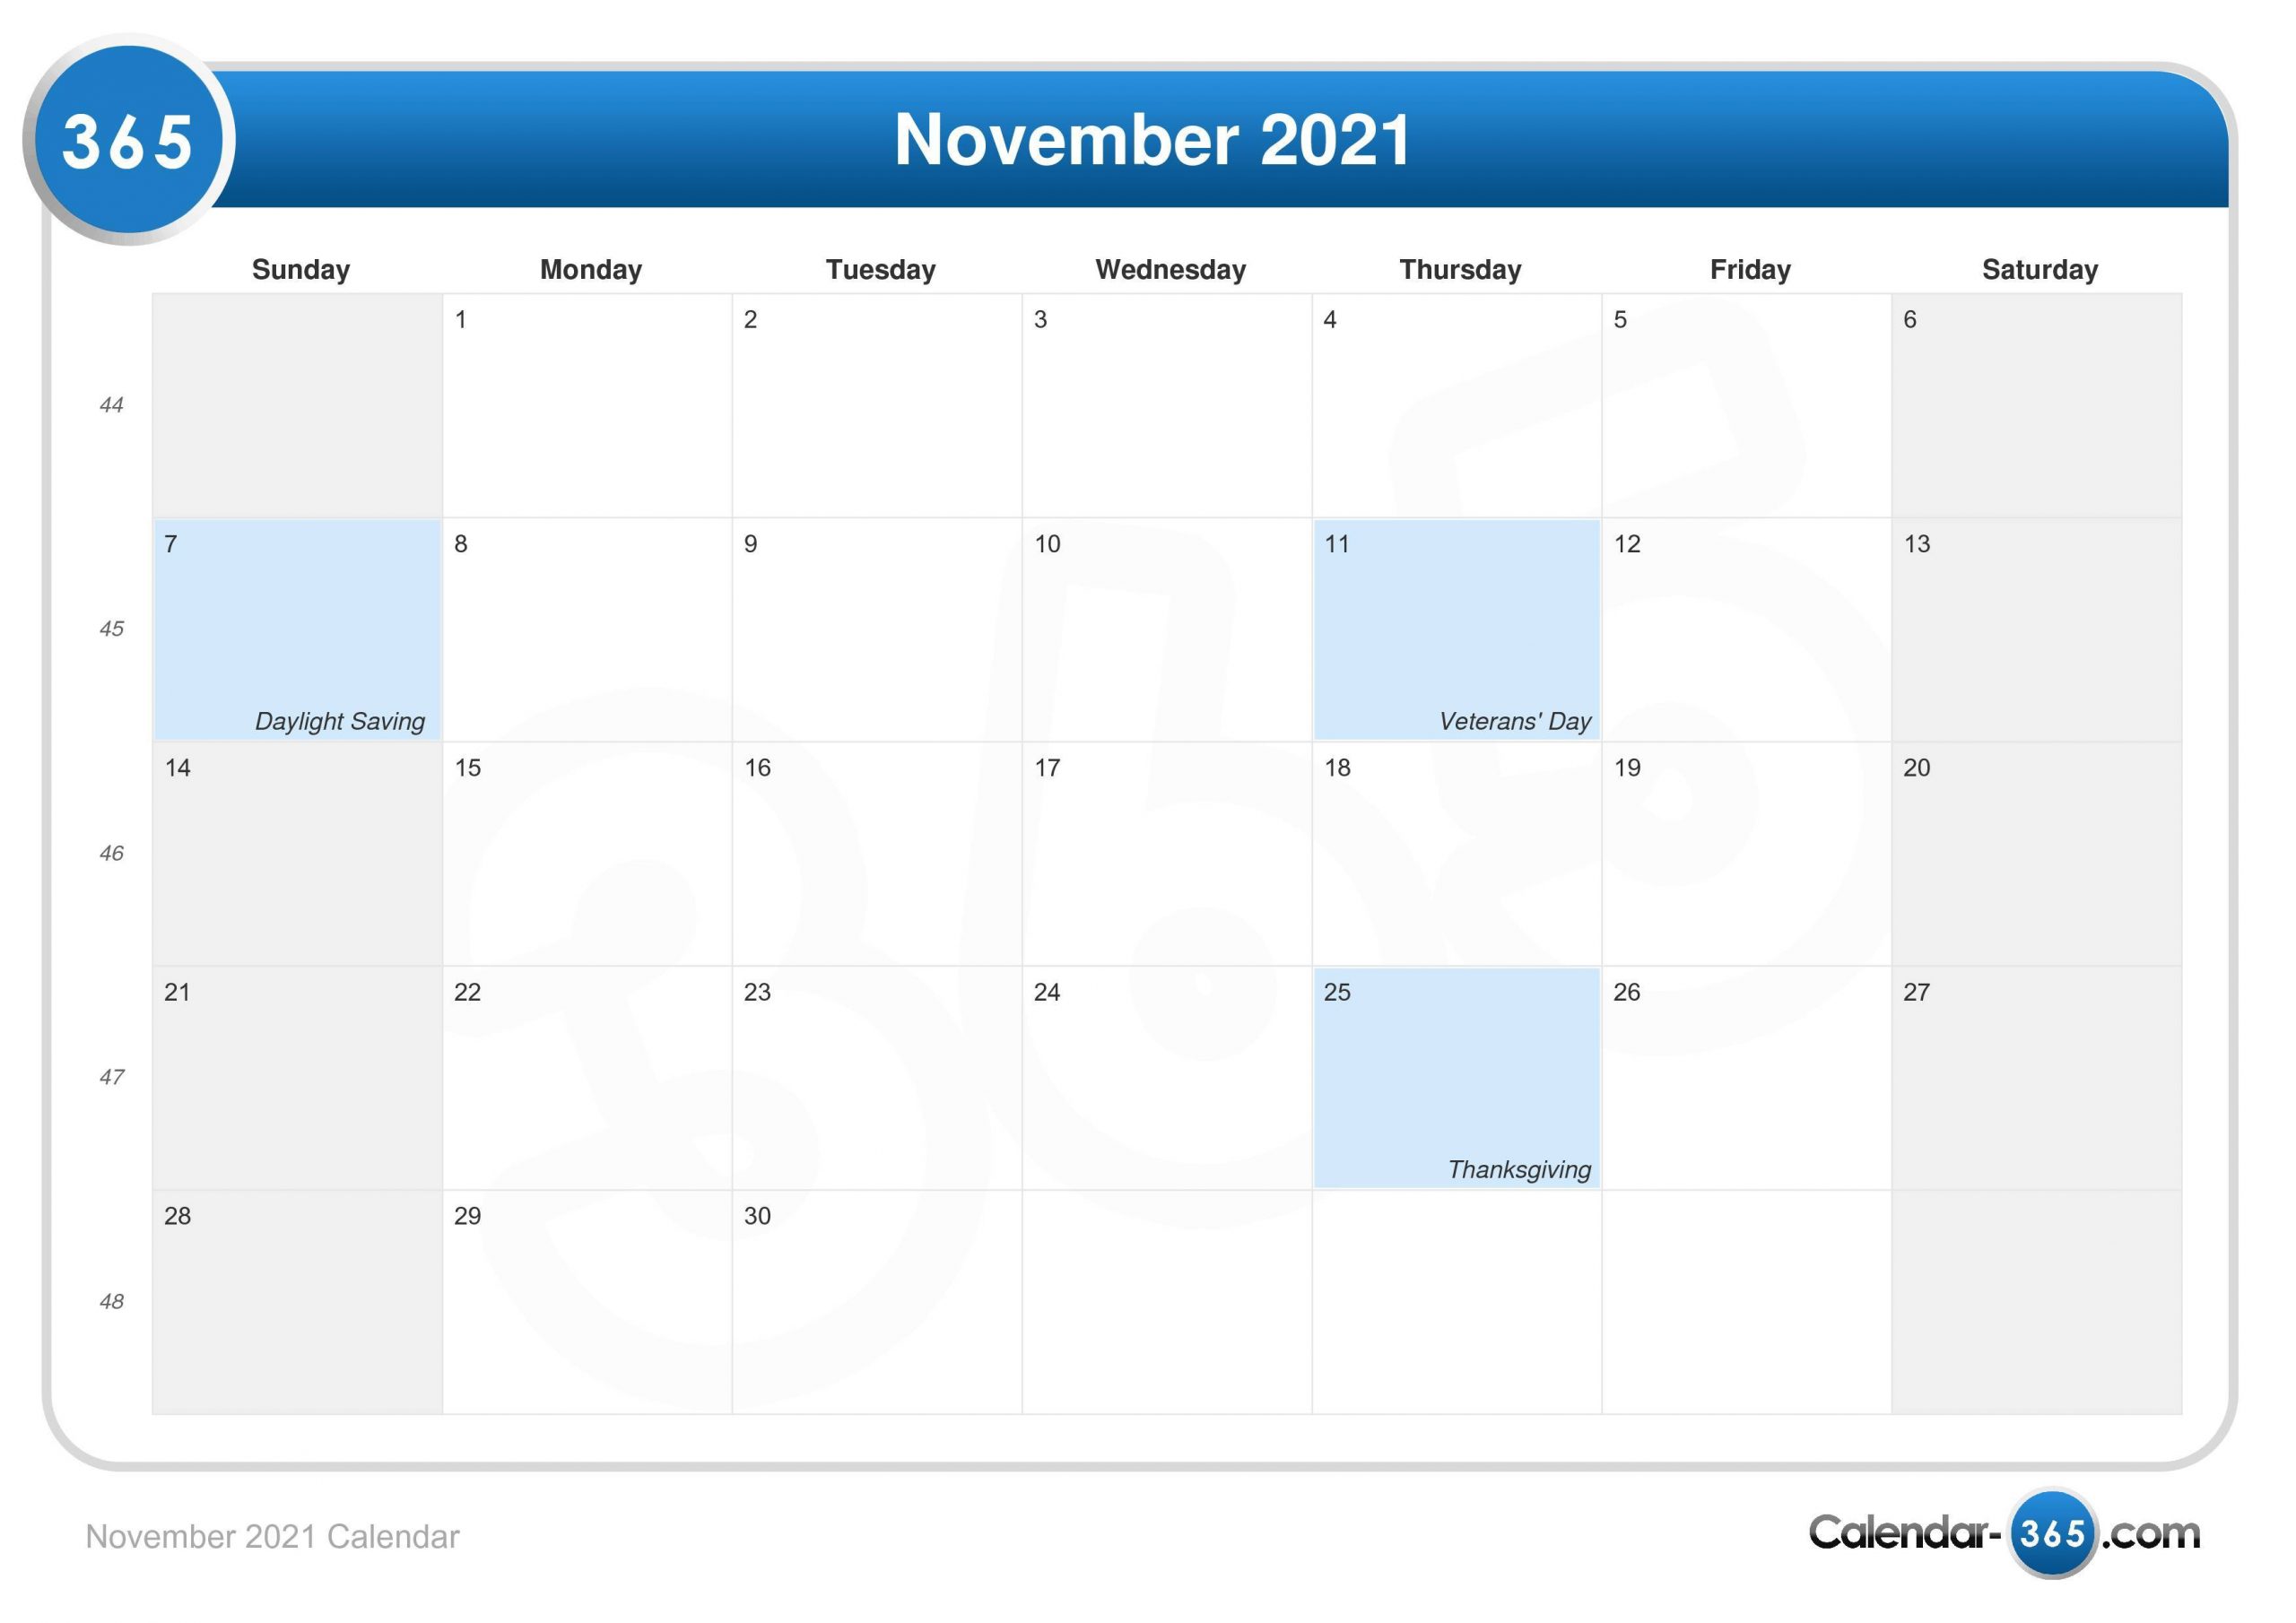 November 2021 Calendar Calendar Of November 2021